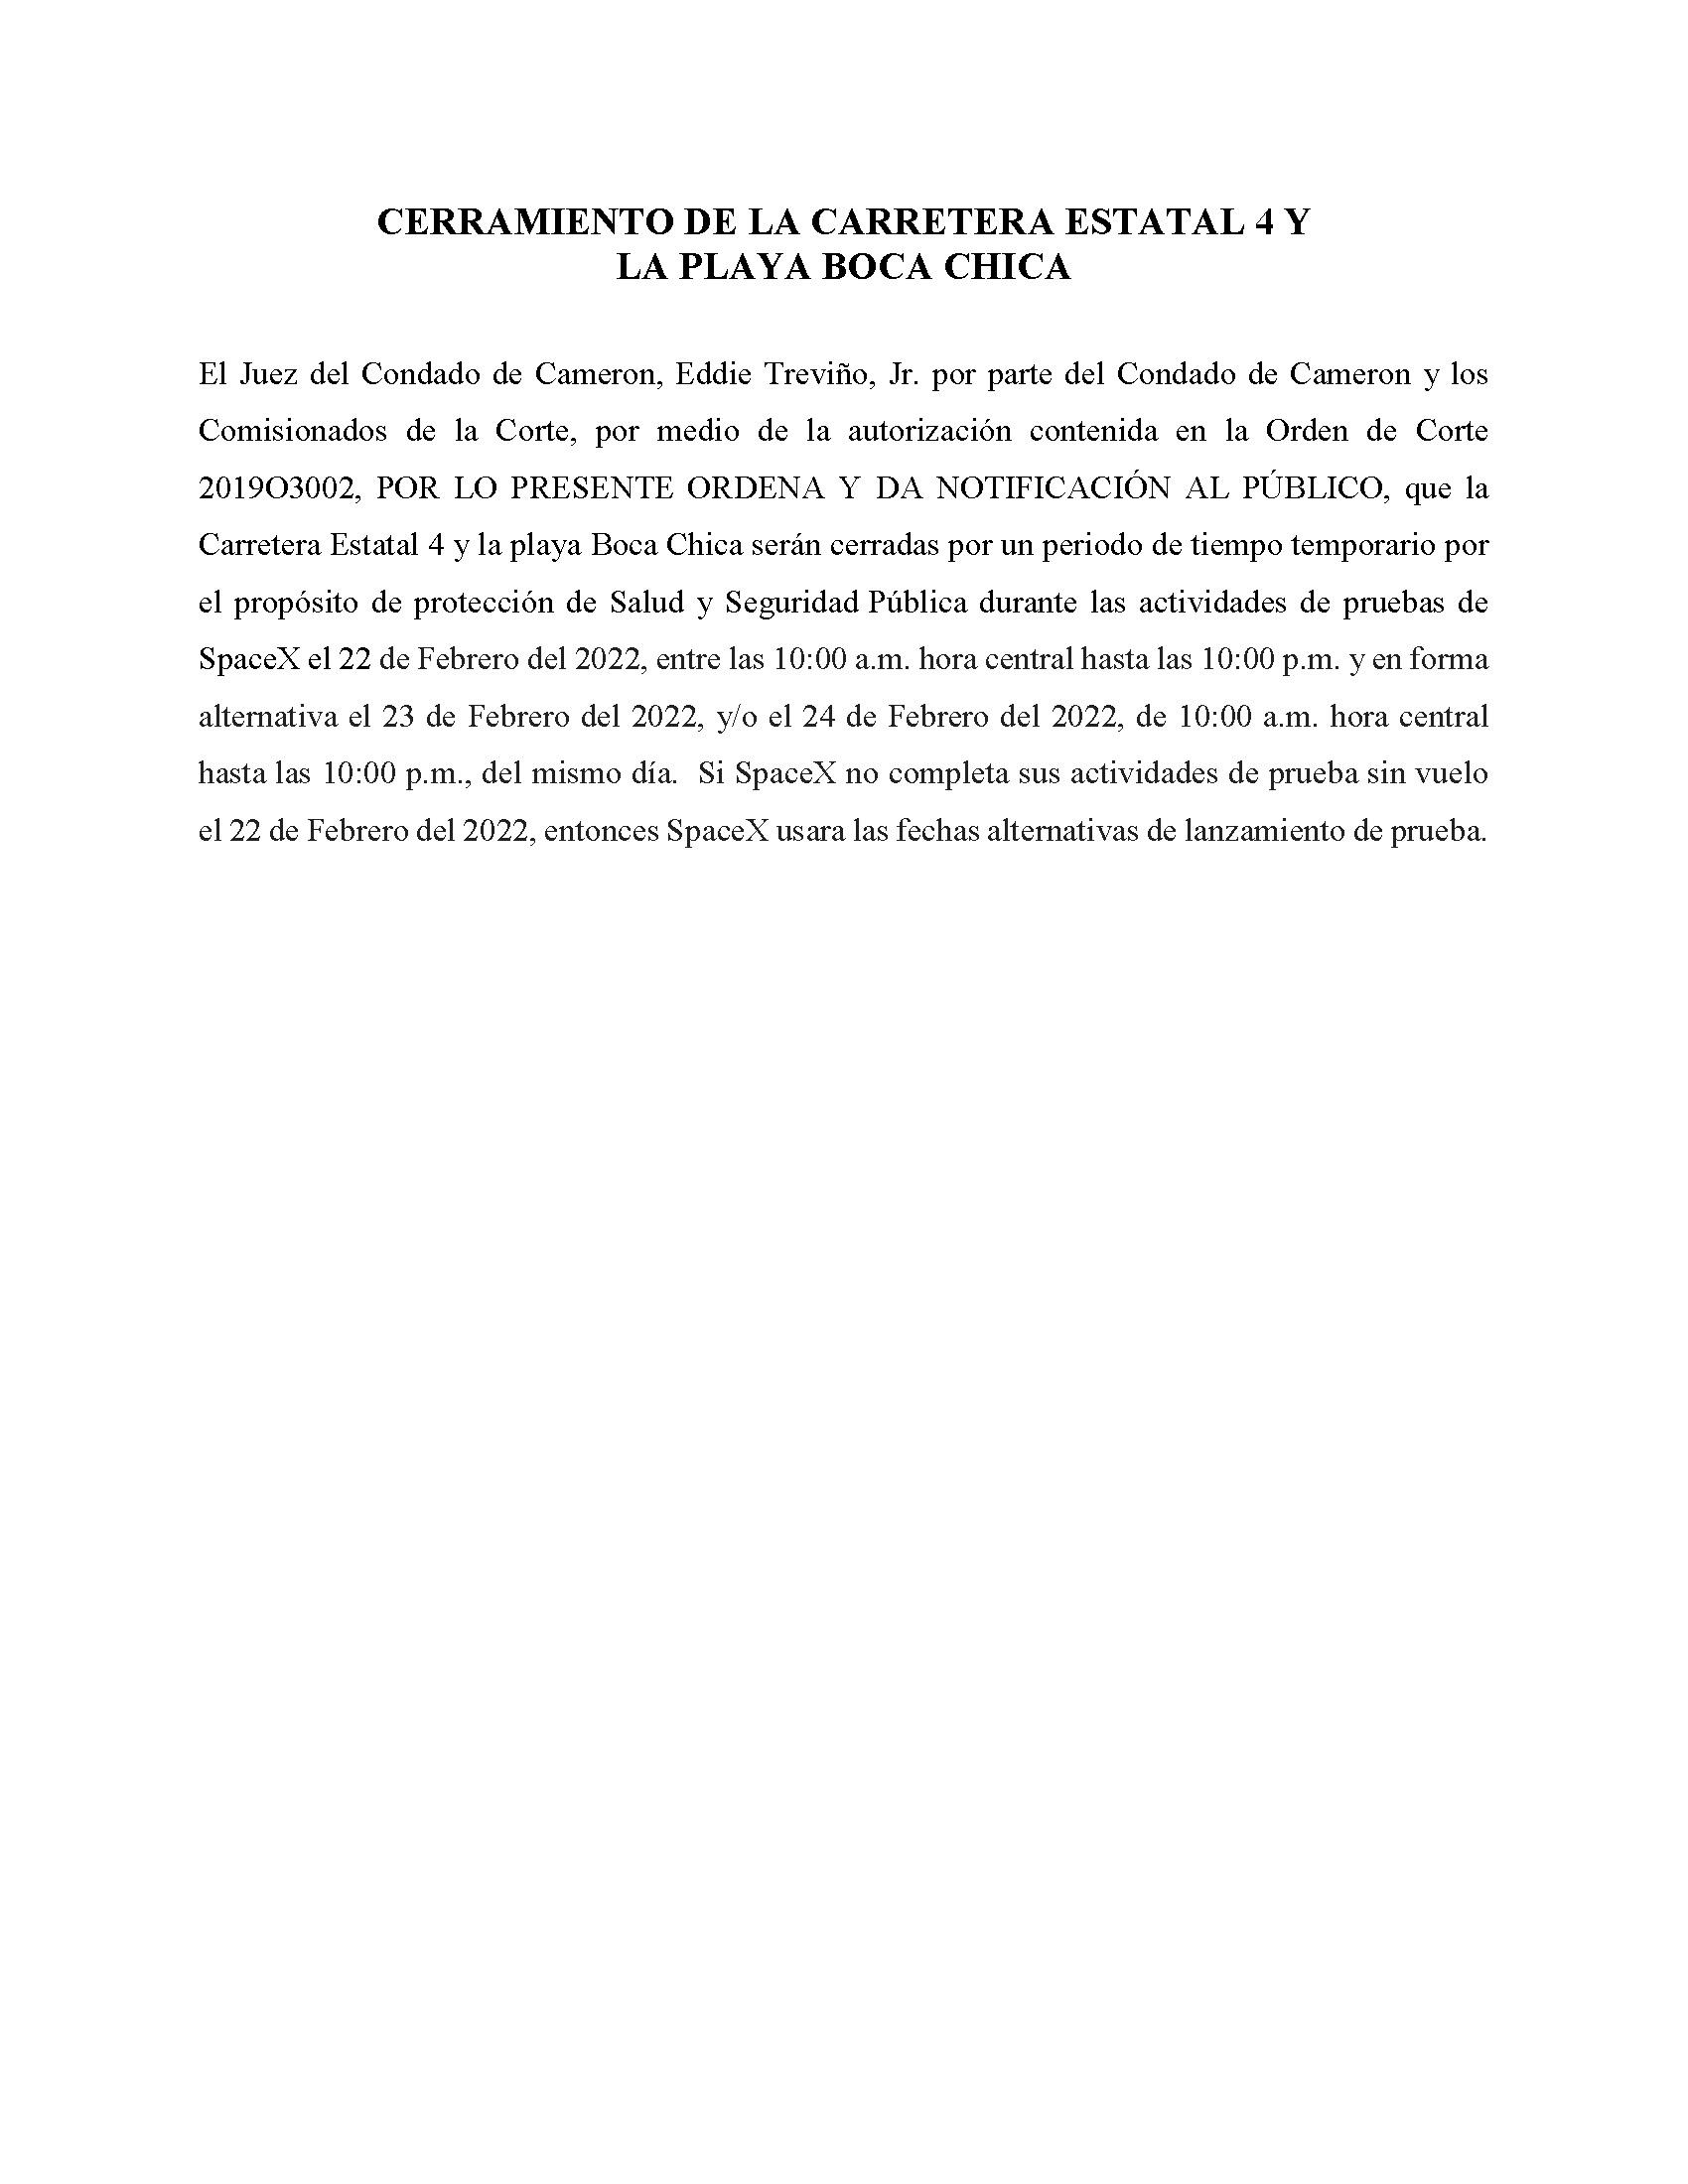 ORDER.CLOSURE OF HIGHWAY 4 Y LA PLAYA BOCA CHICA.SPANISH.02.22.2022